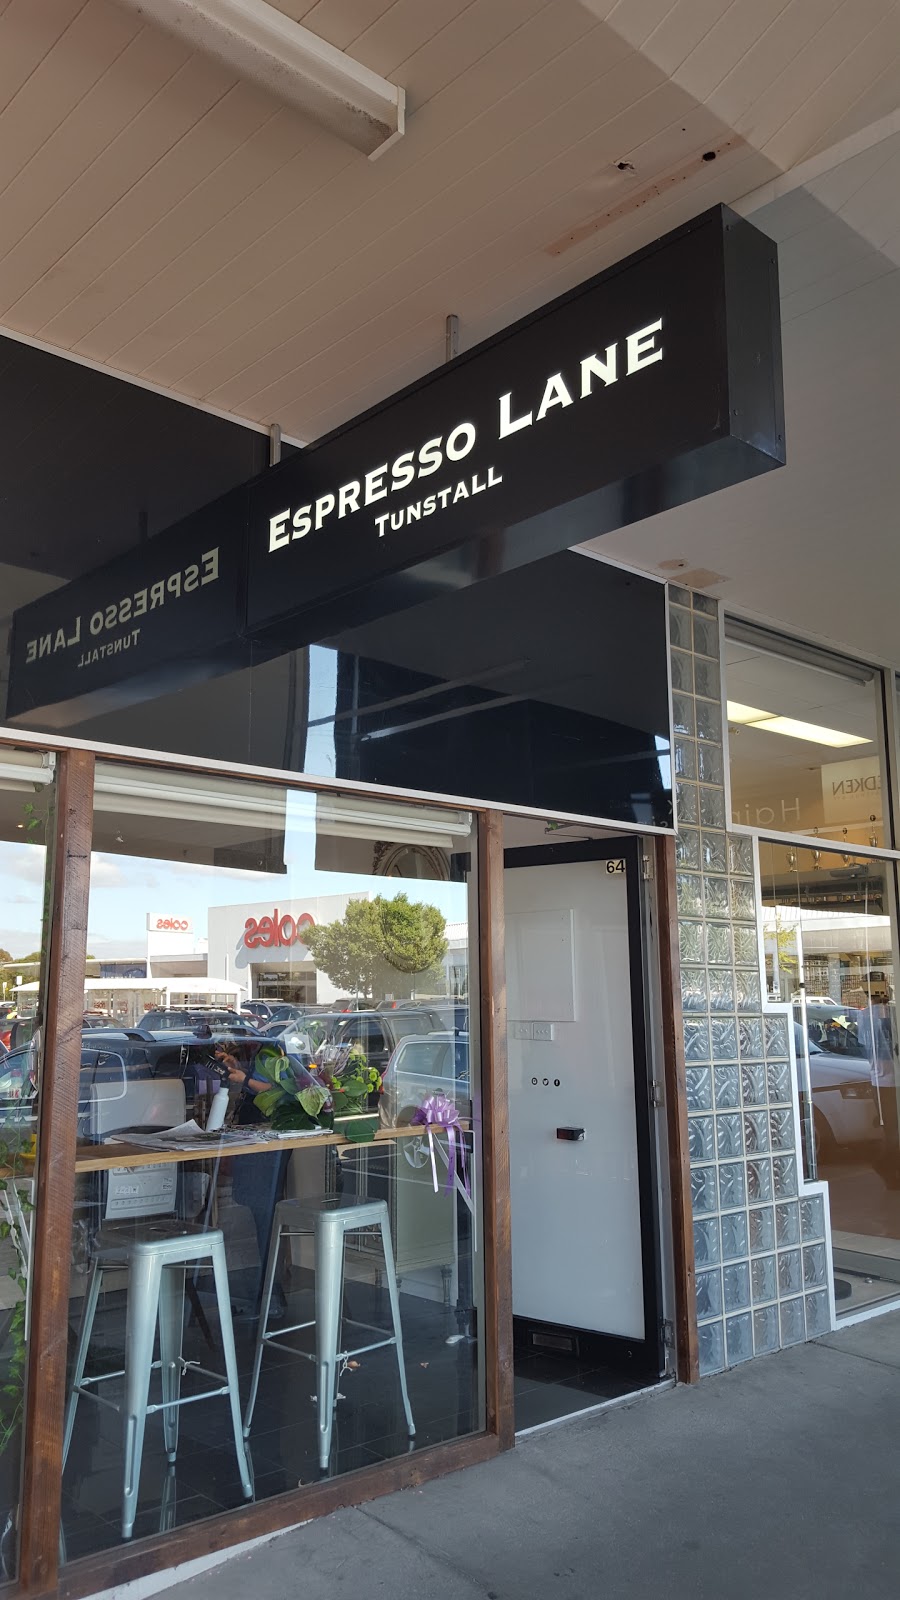 Espresso Lane Tunstall | cafe | 64 Tunstall Square, Doncaster East VIC 3109, Australia | 0481118938 OR +61 481 118 938